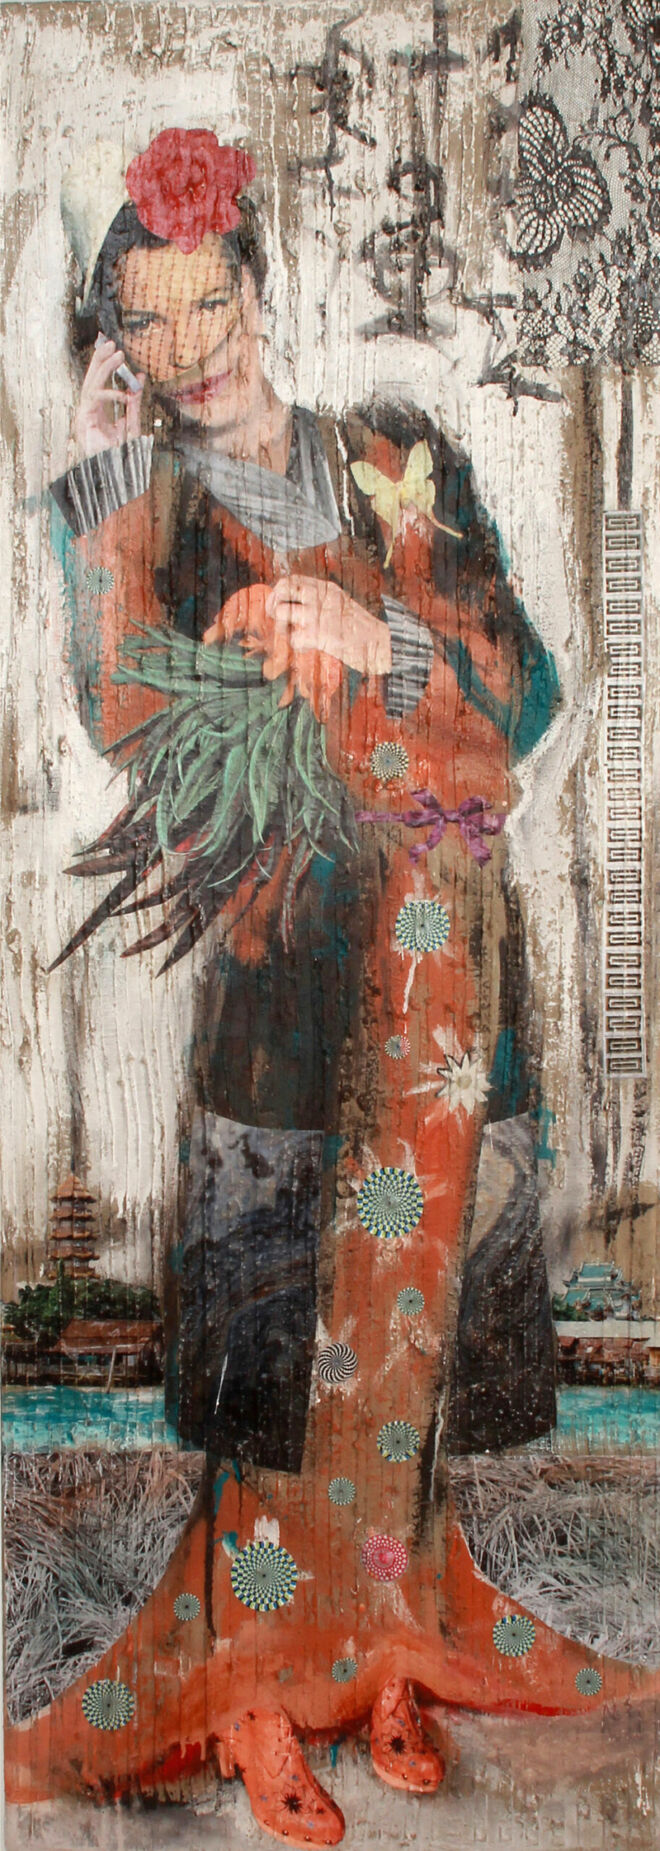 Schönheit 2 hokuseidank, 2013, Mixed Media auf Leinwand, 140 x 50 cm